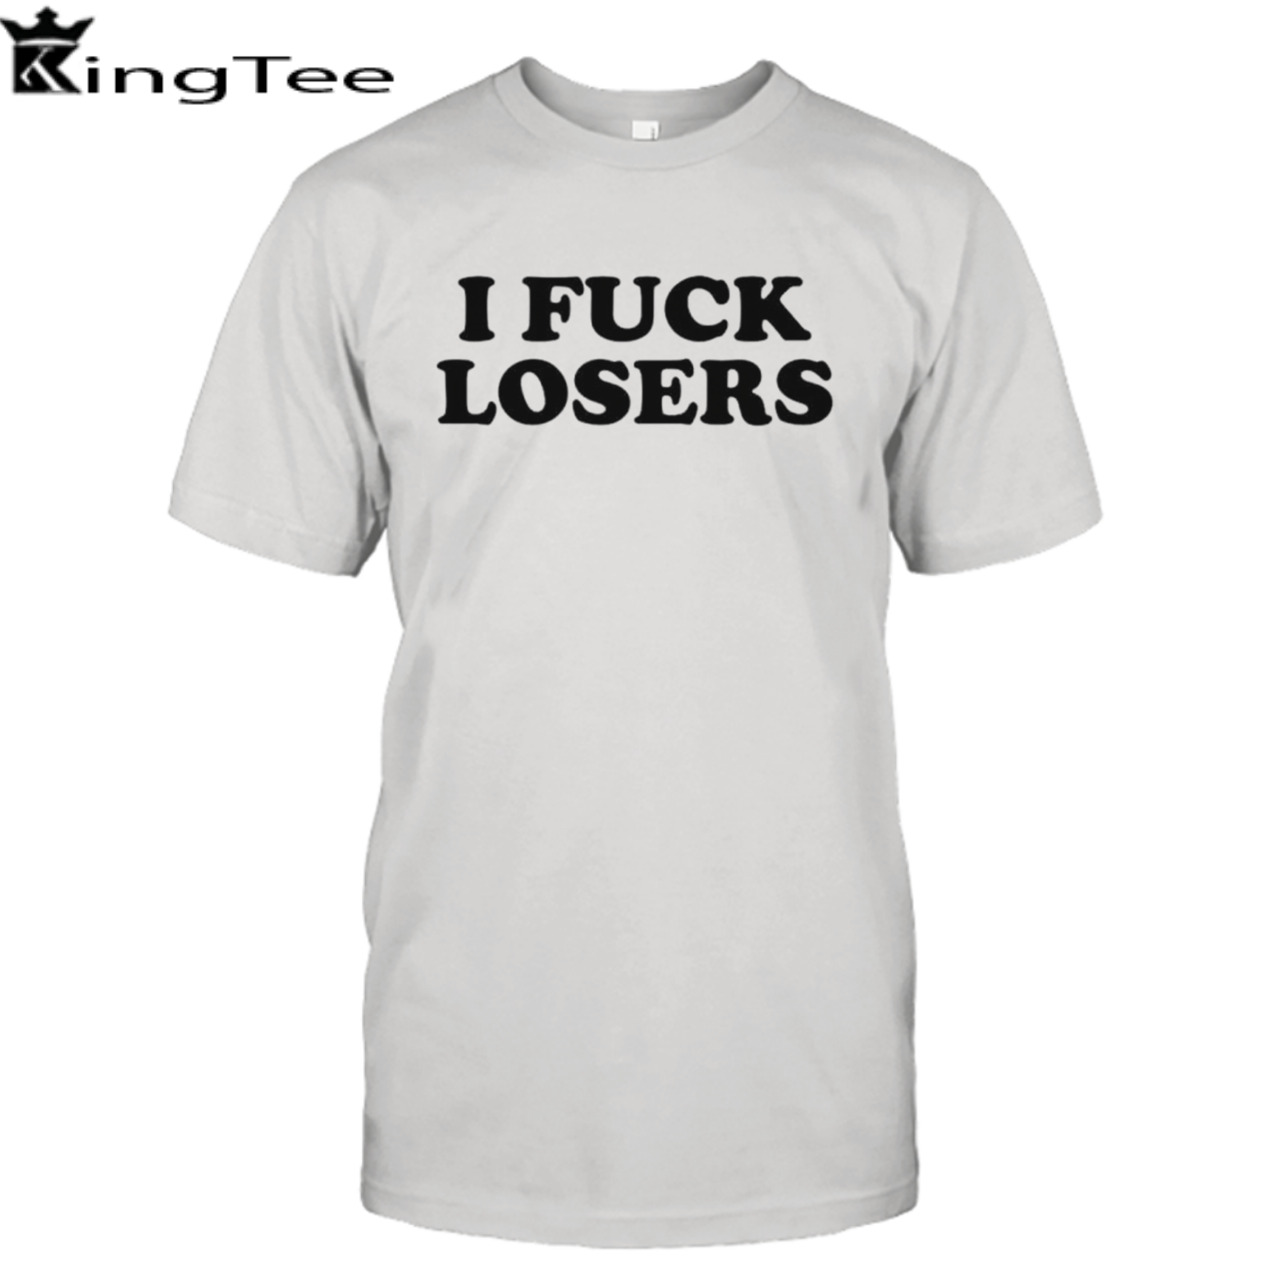 I fuck losers shirt